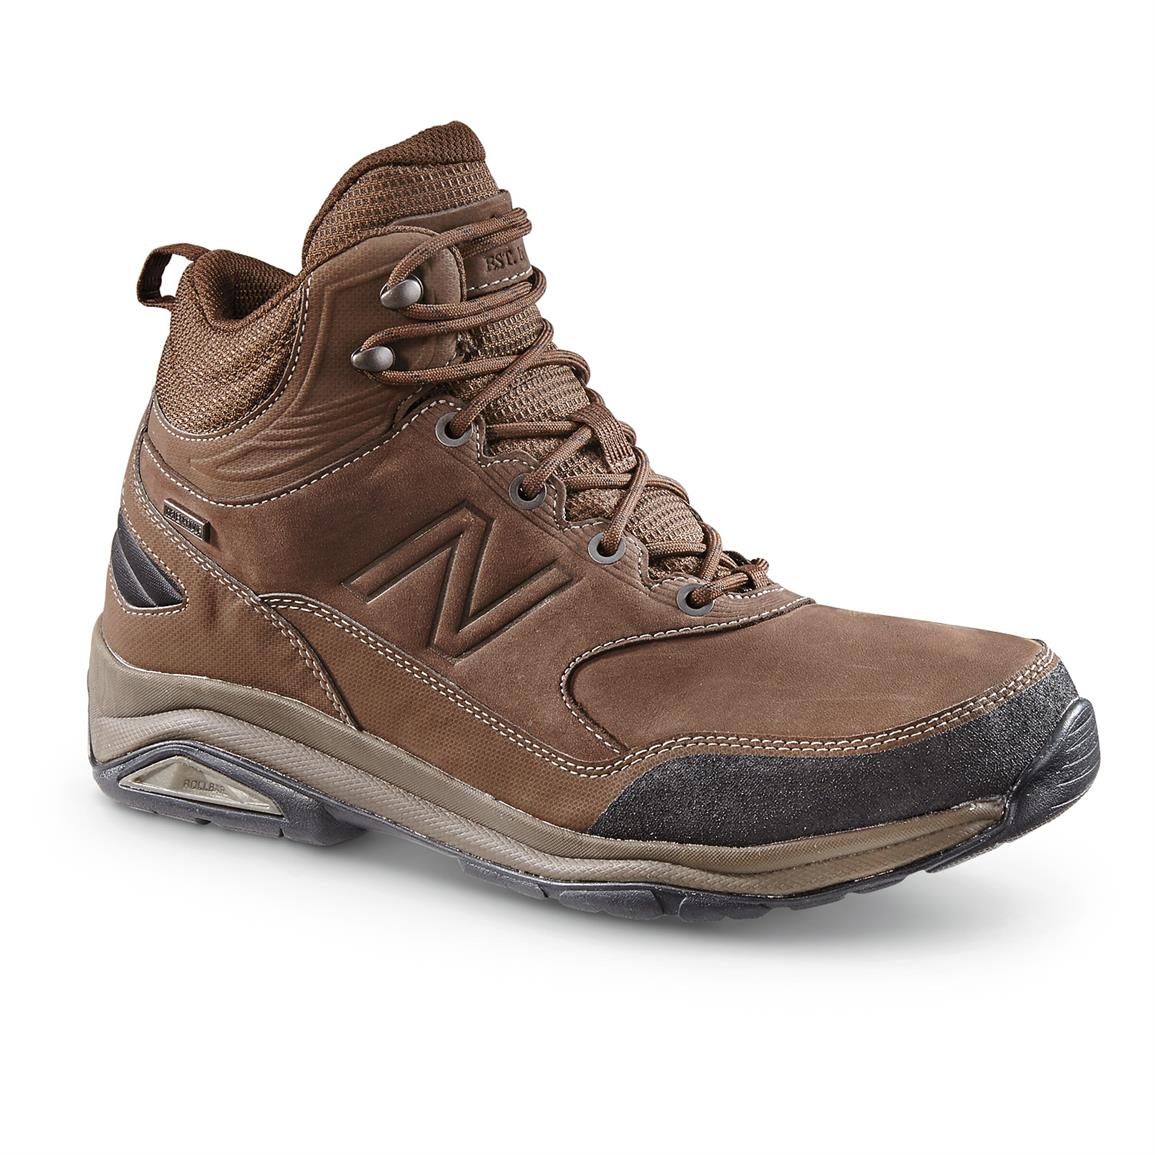 New Balance Men's 1400v1 Hiking Boots 